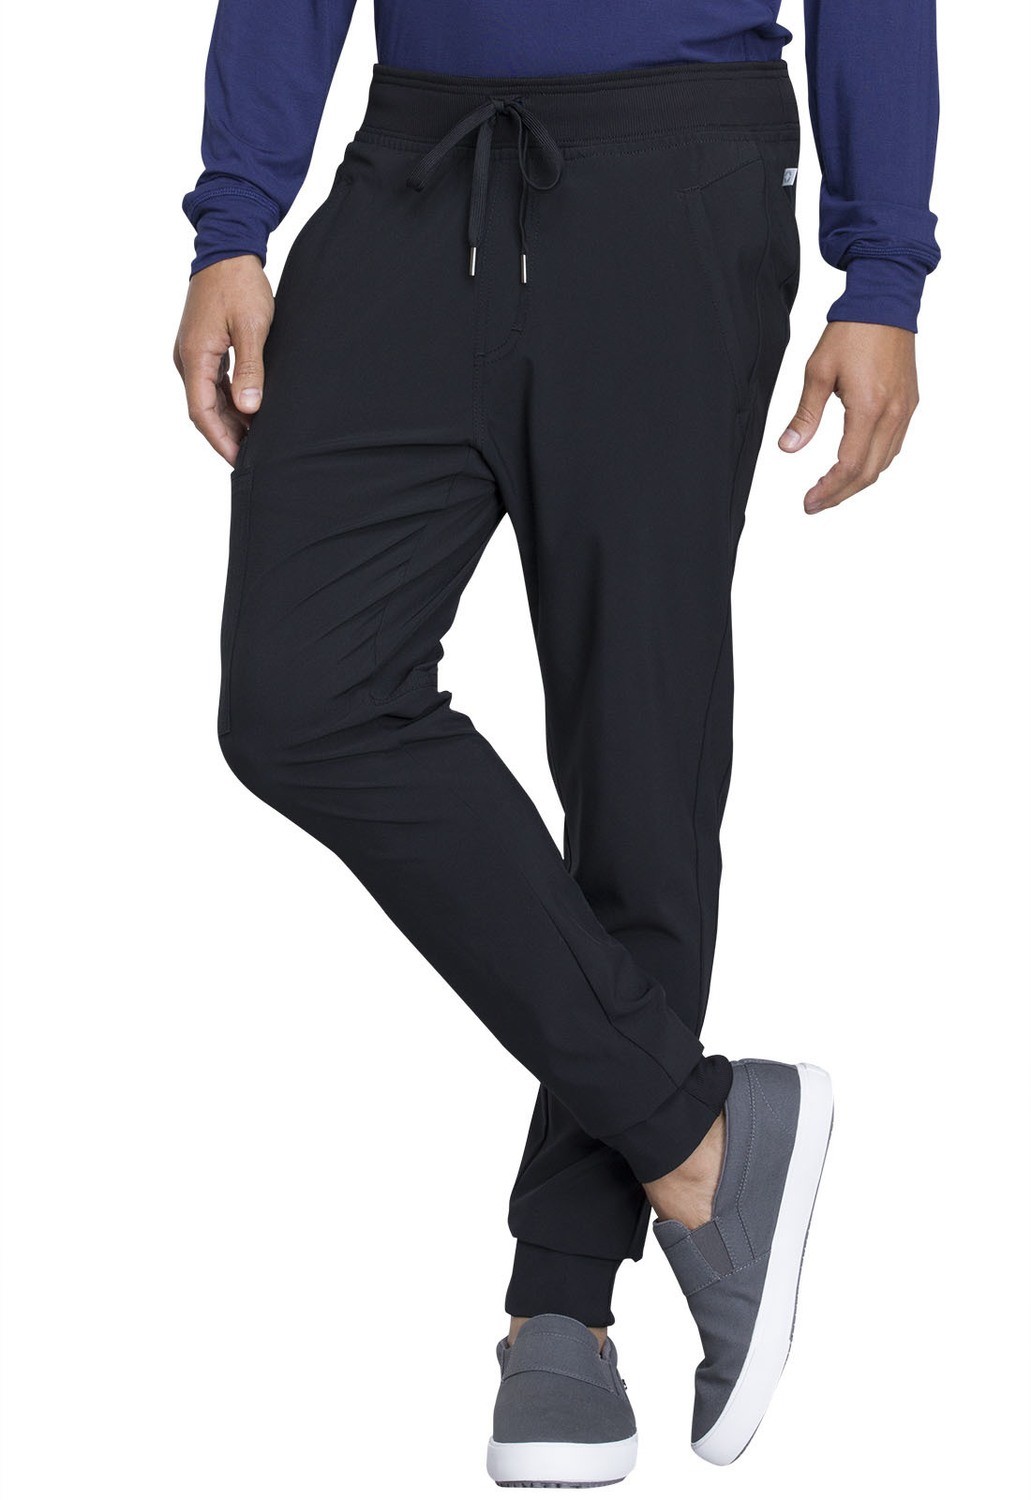 Pantalone CHEROKEE INFINITY CK004A Colore Black - fine serie